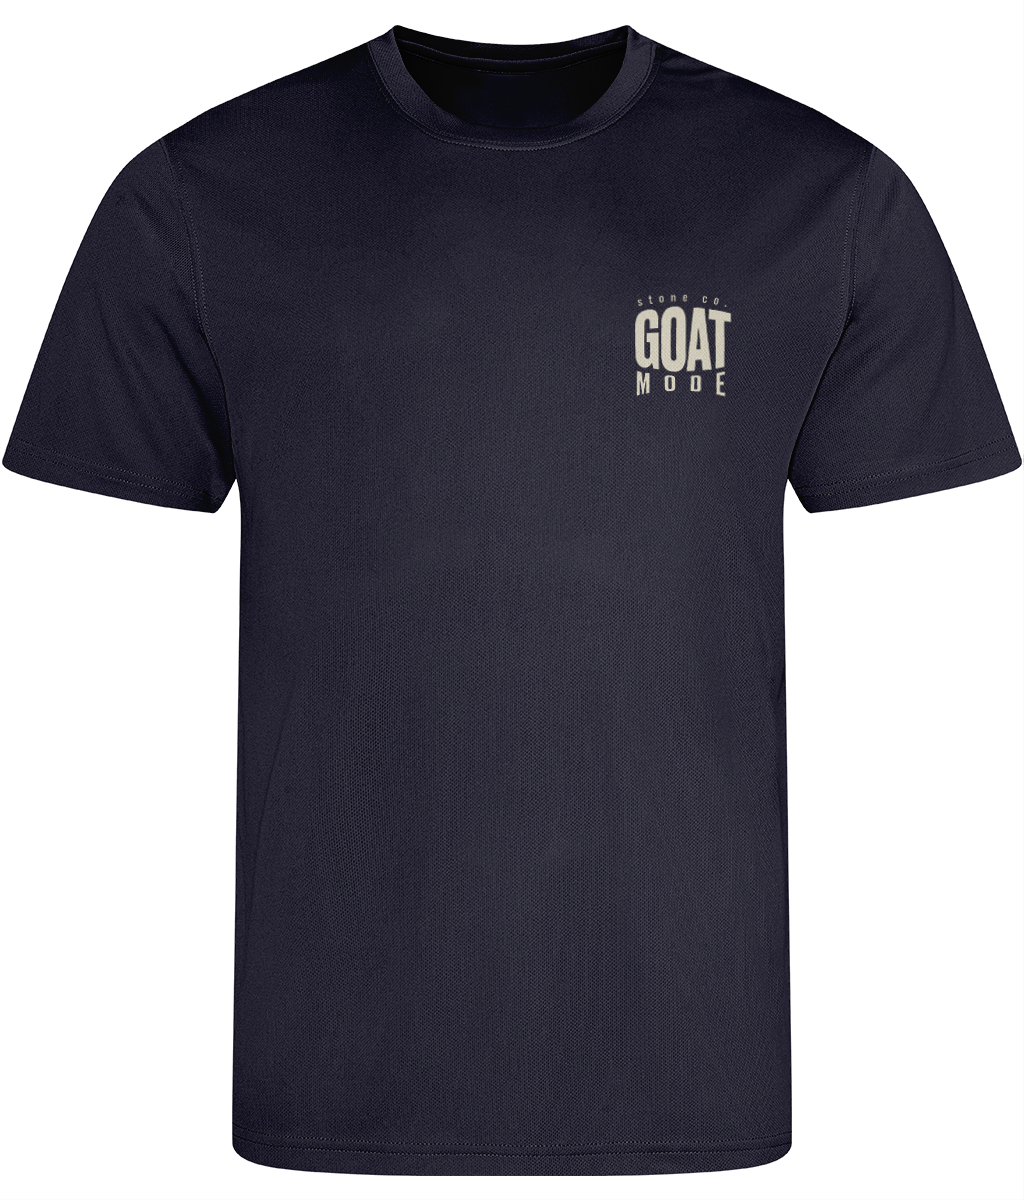 Goat mode active t-shirt